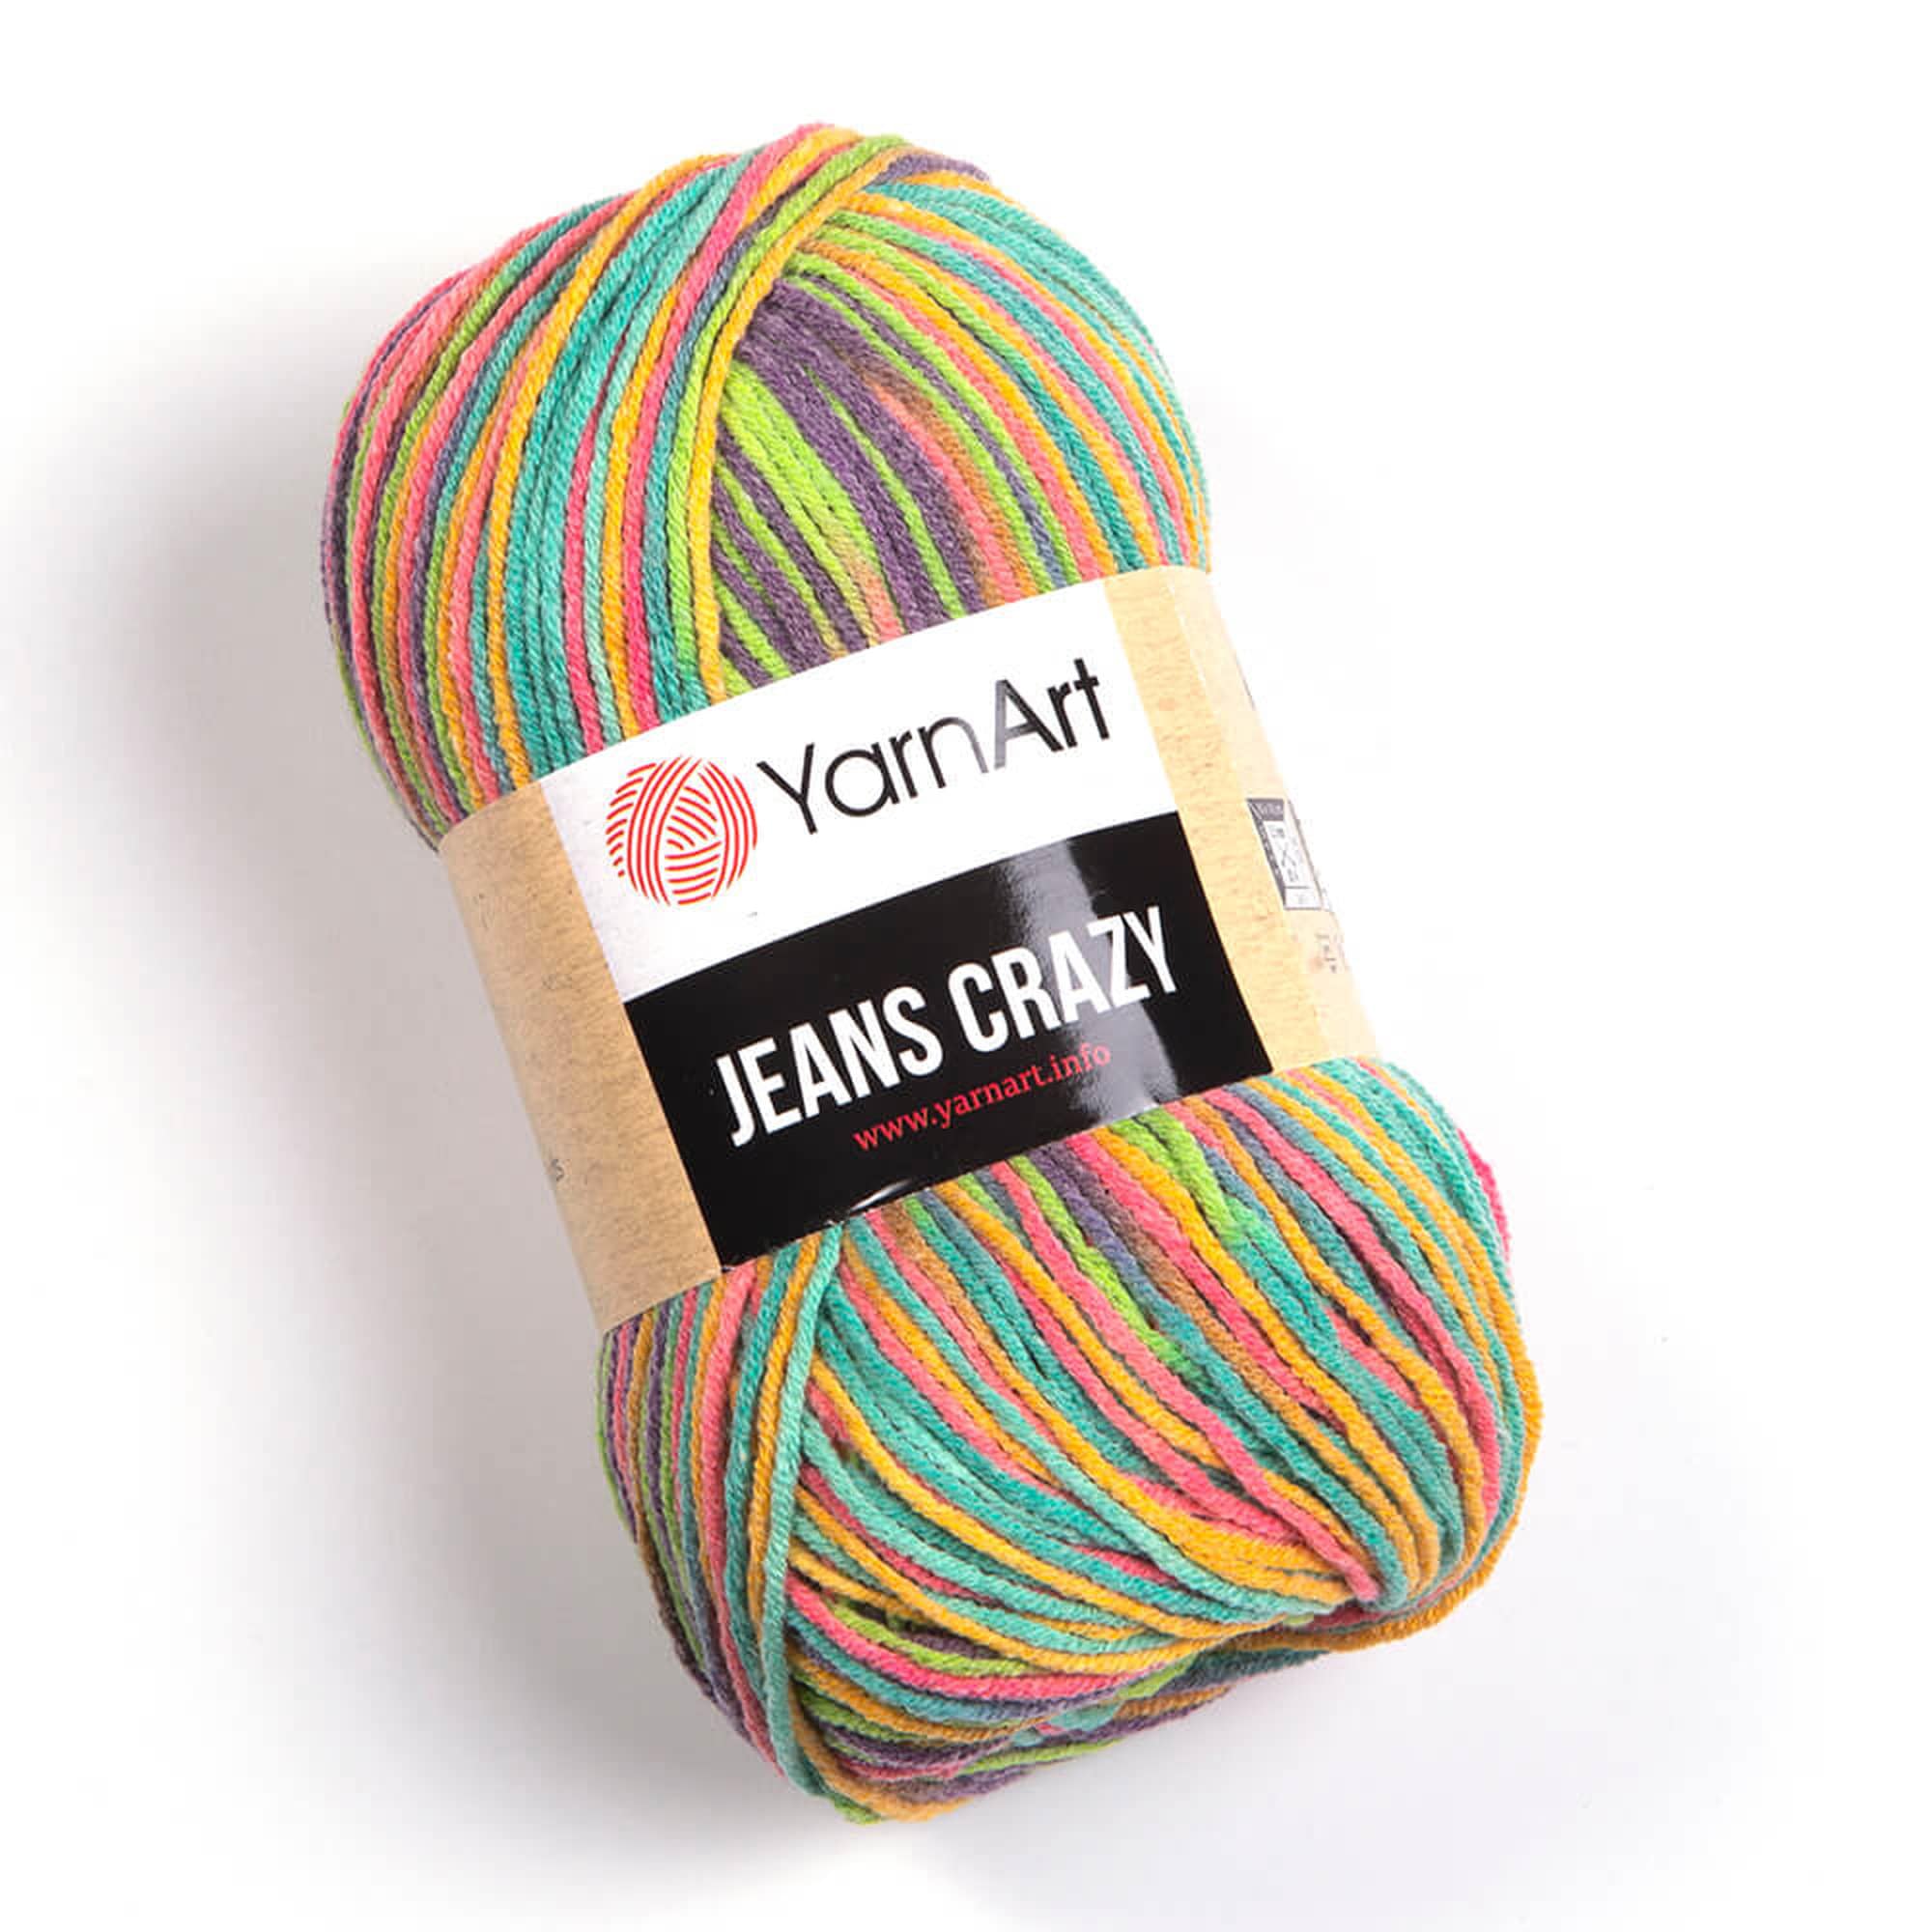 YarnArt Crazy Color, Knitting Yarn